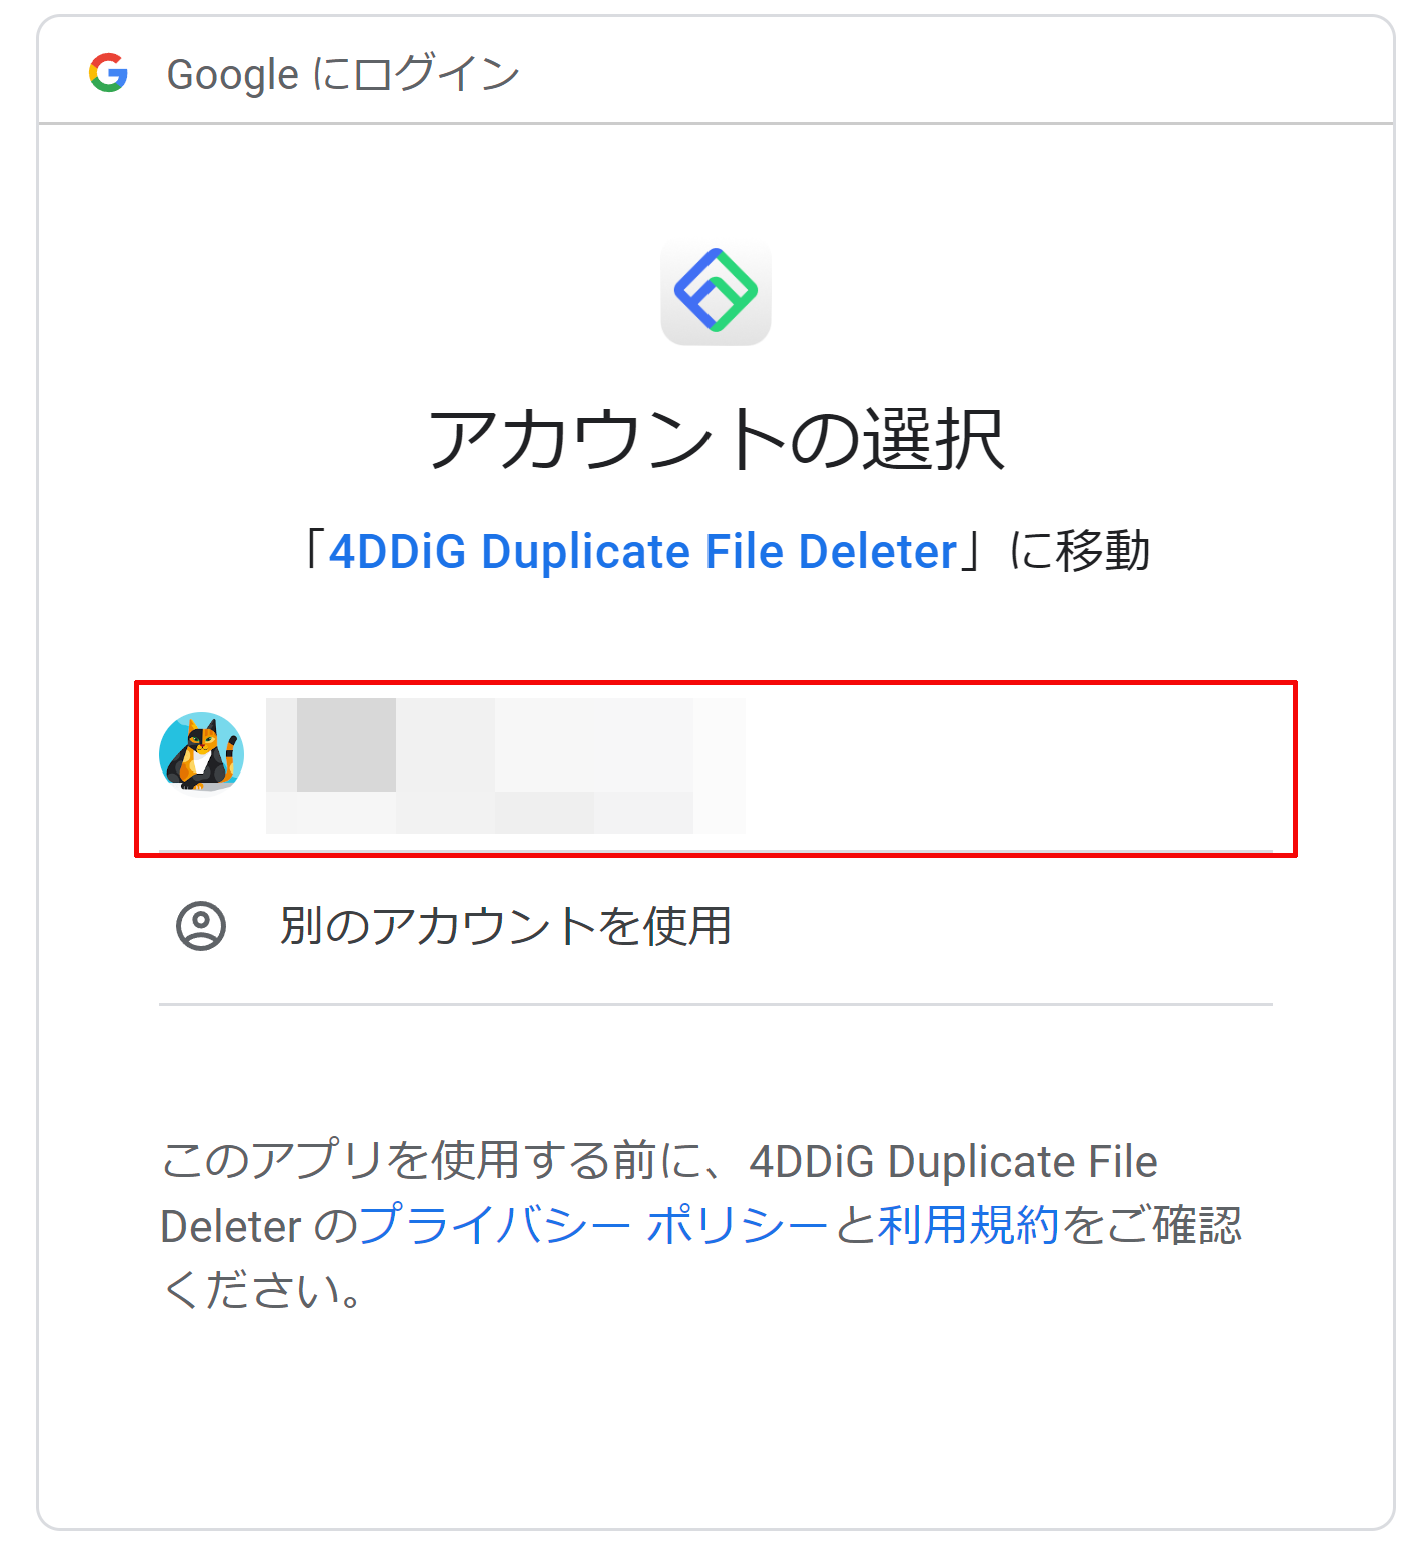 ①4DDiG Duplicate File Deleterと自身のGoogleドライブのアカウントとの連携を行う